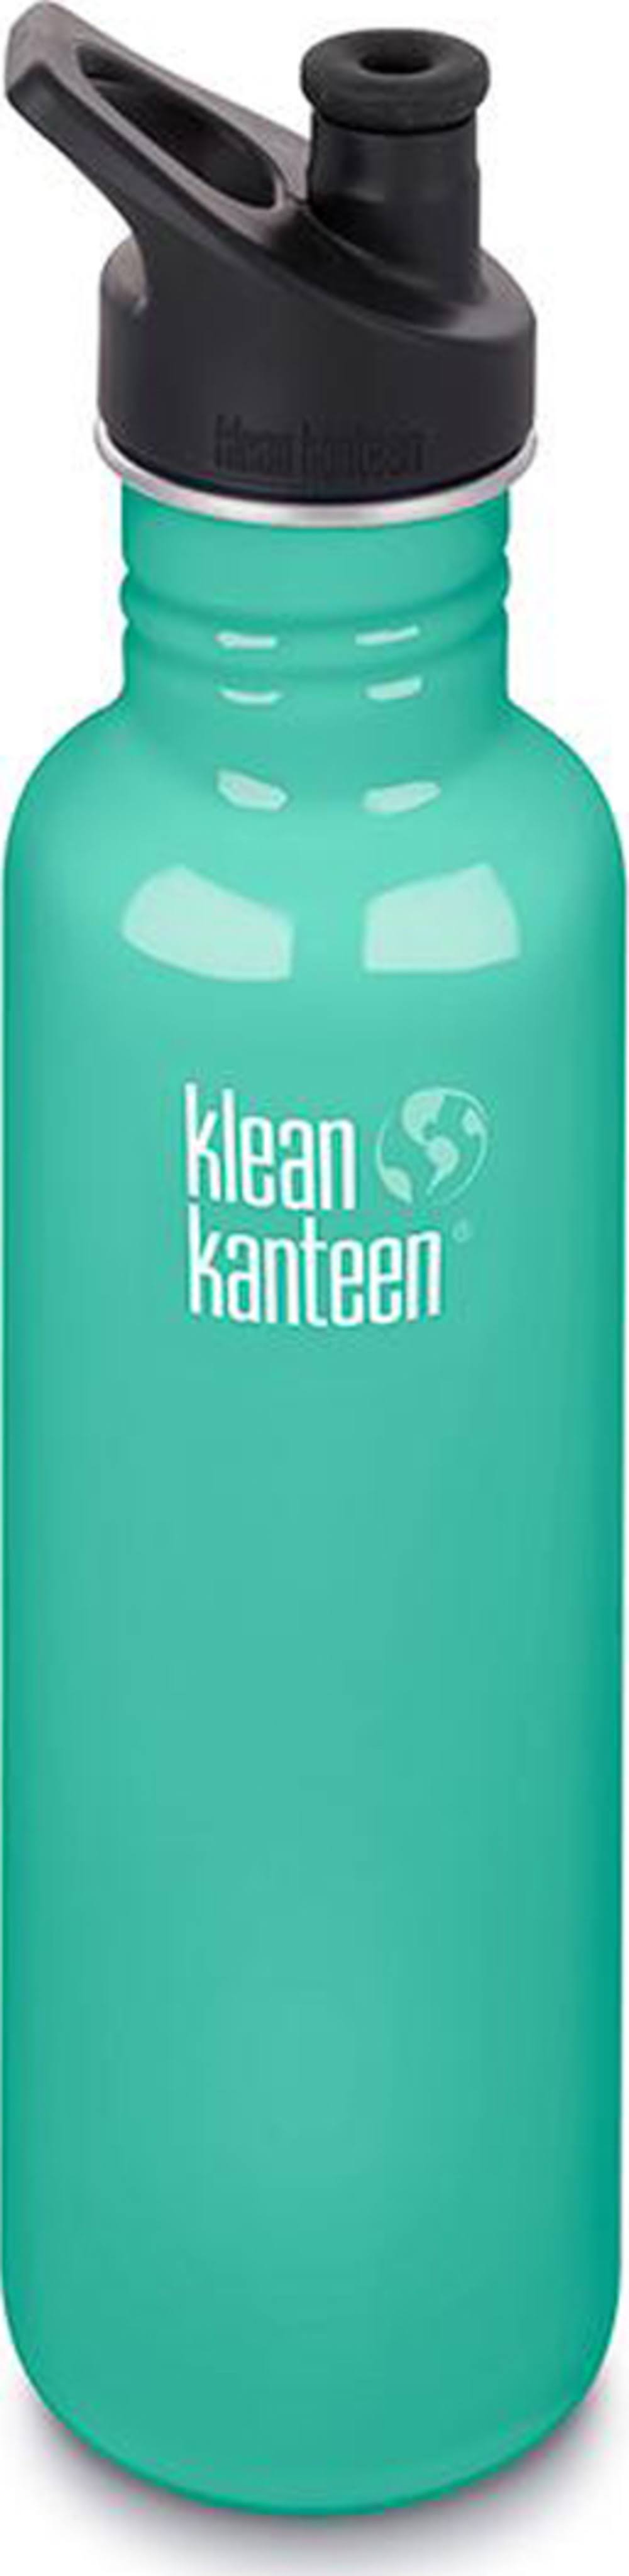 Klean Kanteen Classic Stainless Steel Water Bottle - Sea Crest, 27oz